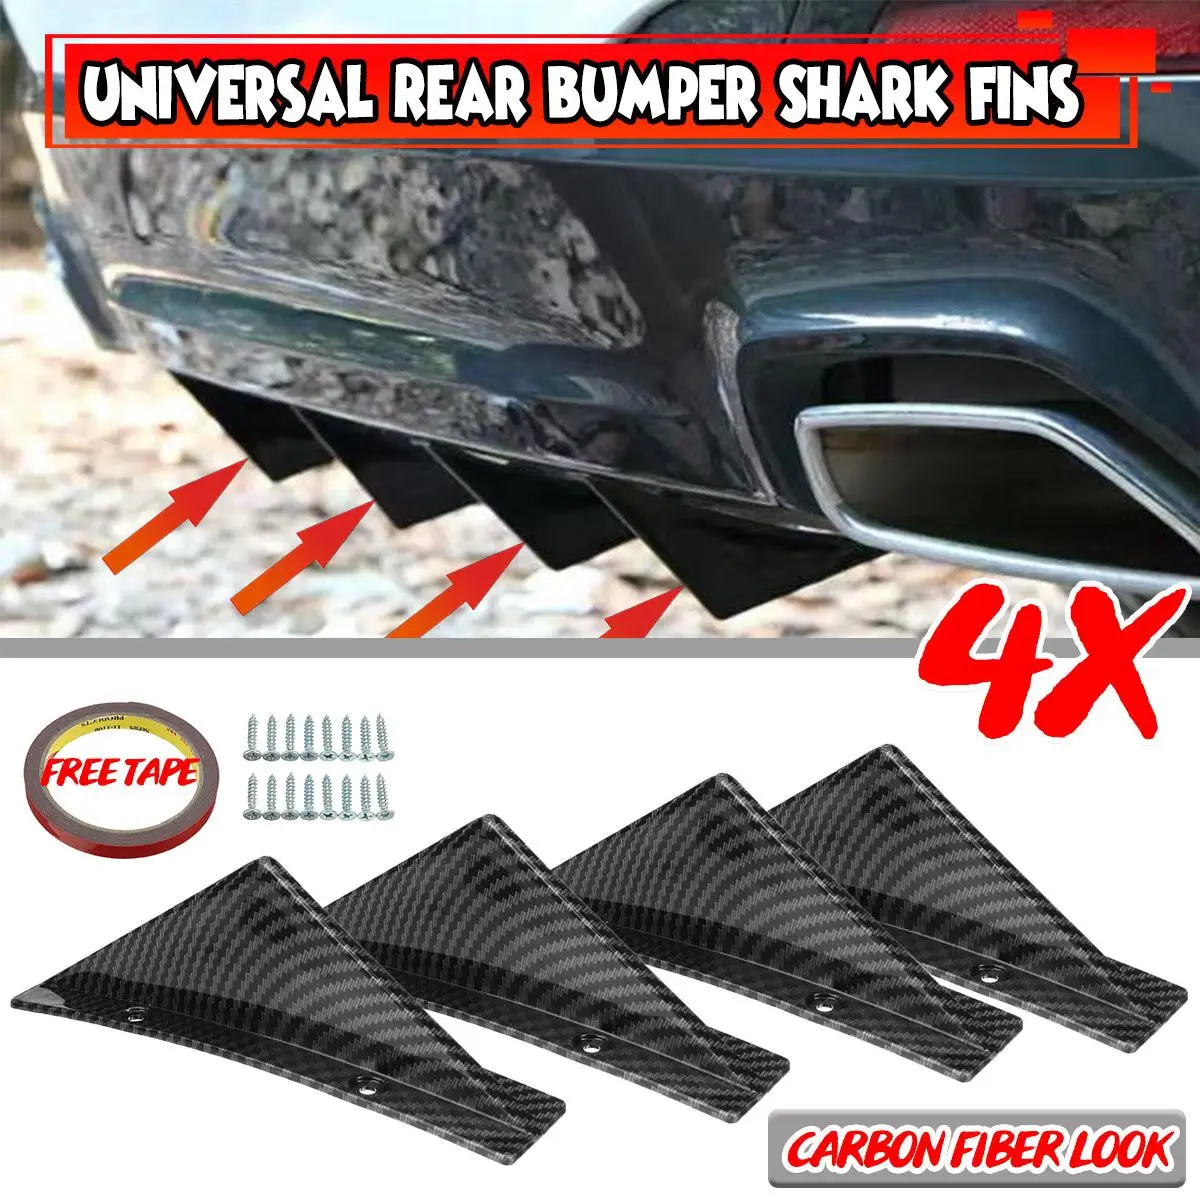 Universal 4pcs Car Rear Bumper Lip Diffuser Shark Fins Spoiler For VW For GOLF MK5 MK6 MK7 MK7.5 MK8 For AUDI A3 A4 A6 A7 A8 TT